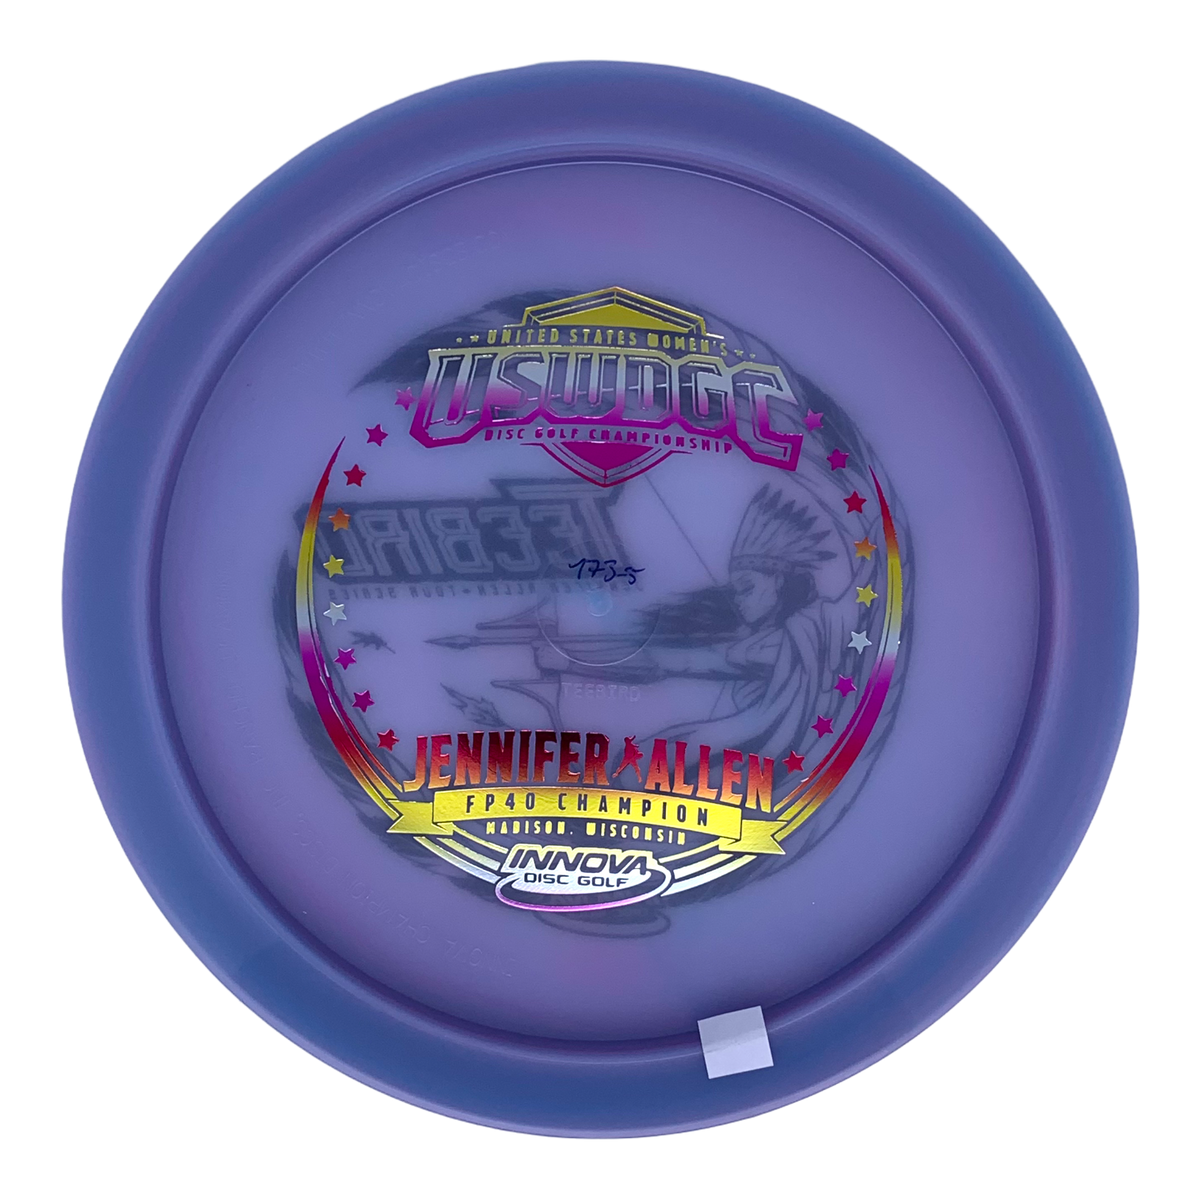 Innova Champion Color Glow Teebird - Jennifer Allen USWDGC Champion